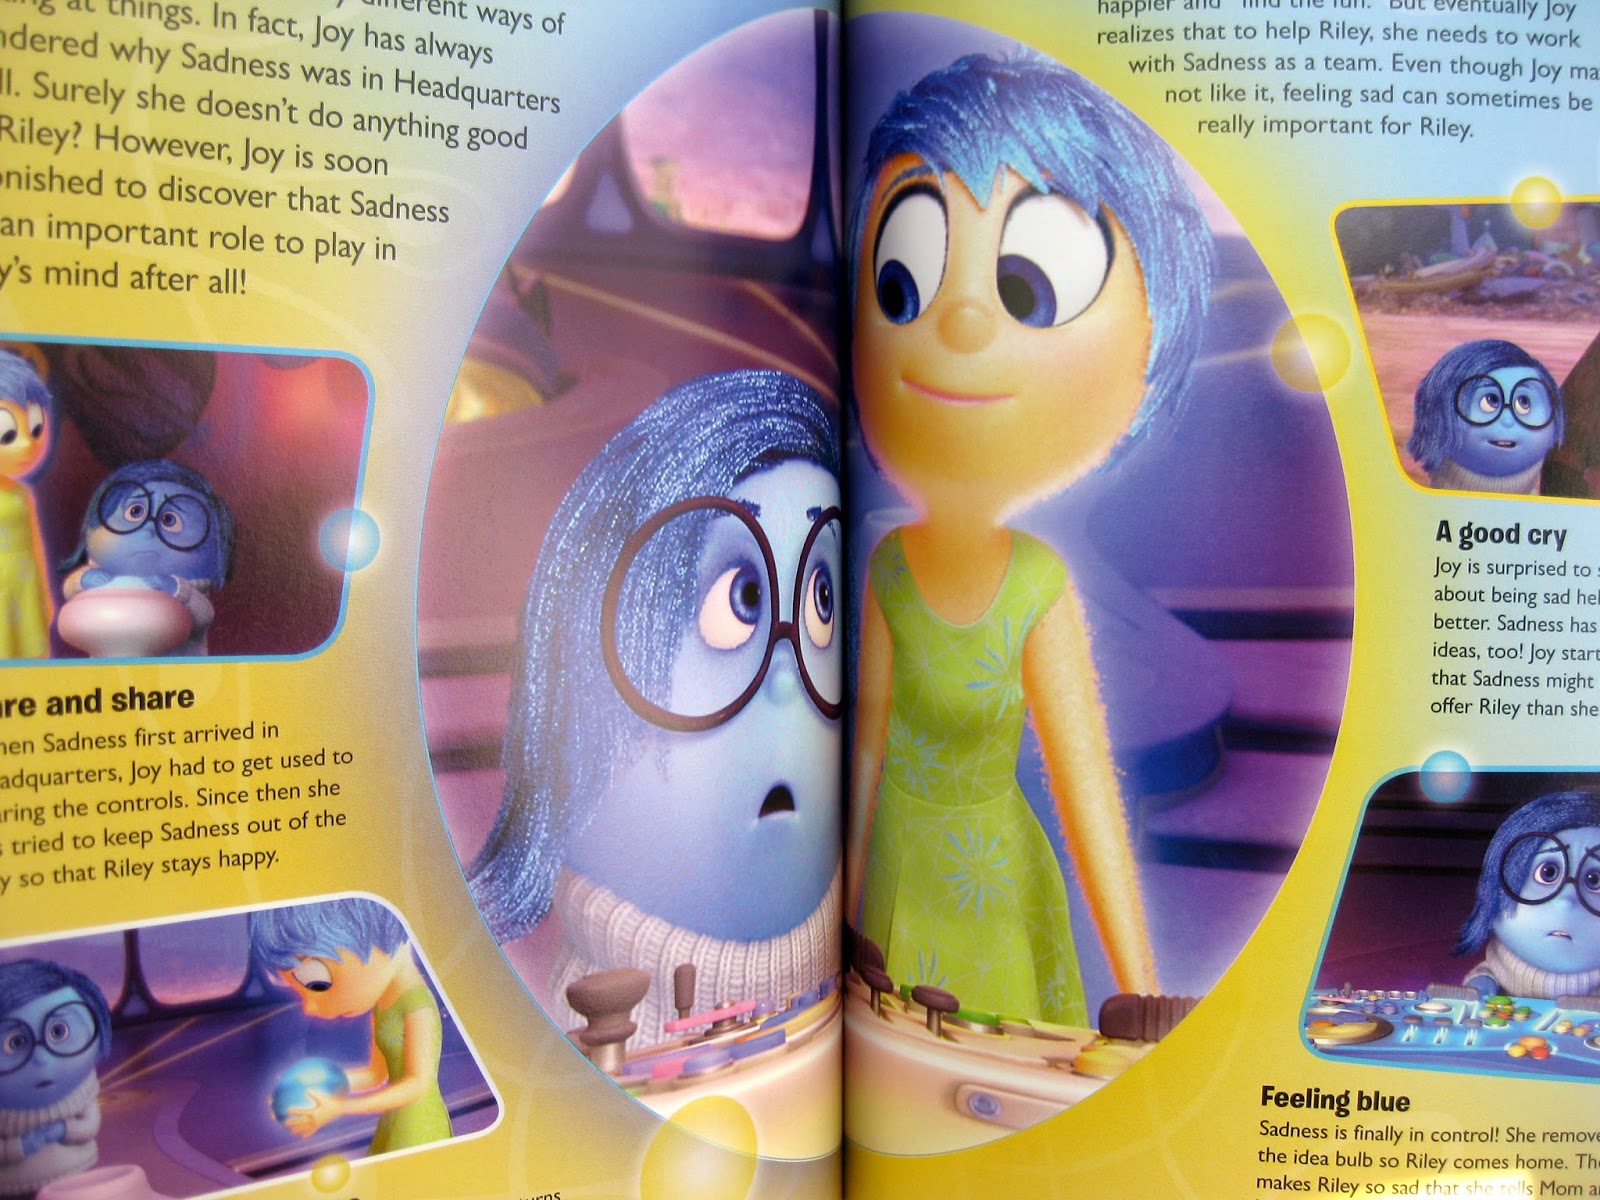 Dan the Pixar Fan: Monsters Inc: The Essential Guide